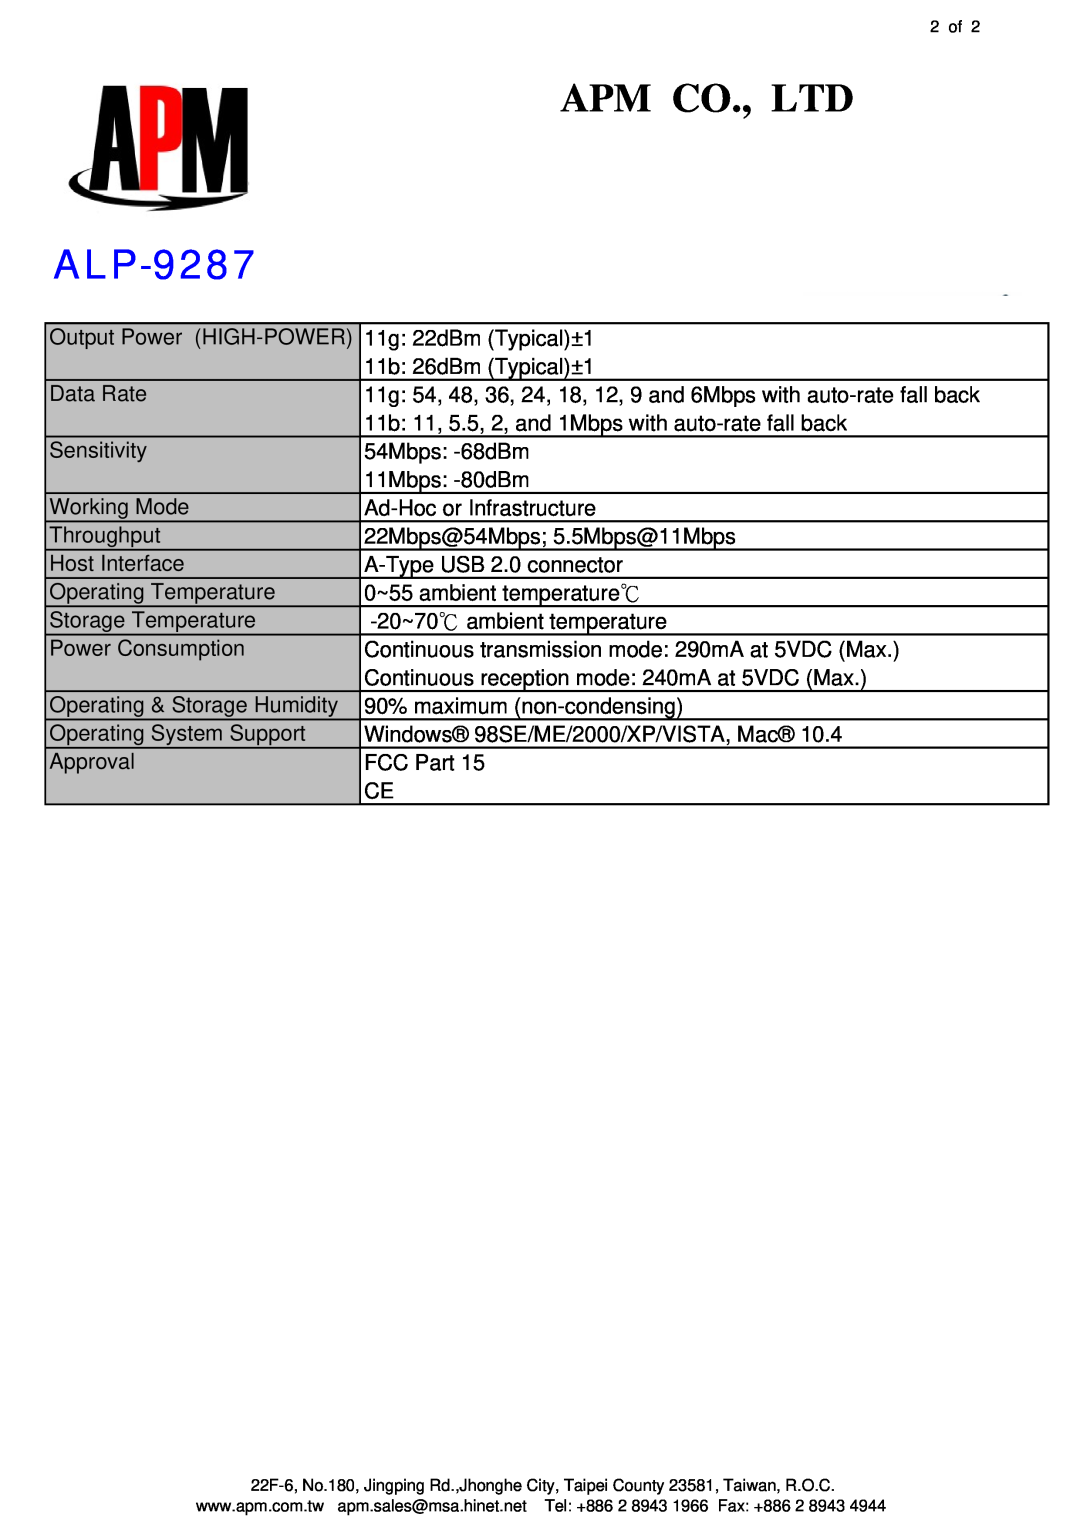 APM ALP-9287 manual Output Power HIGH-POWER 